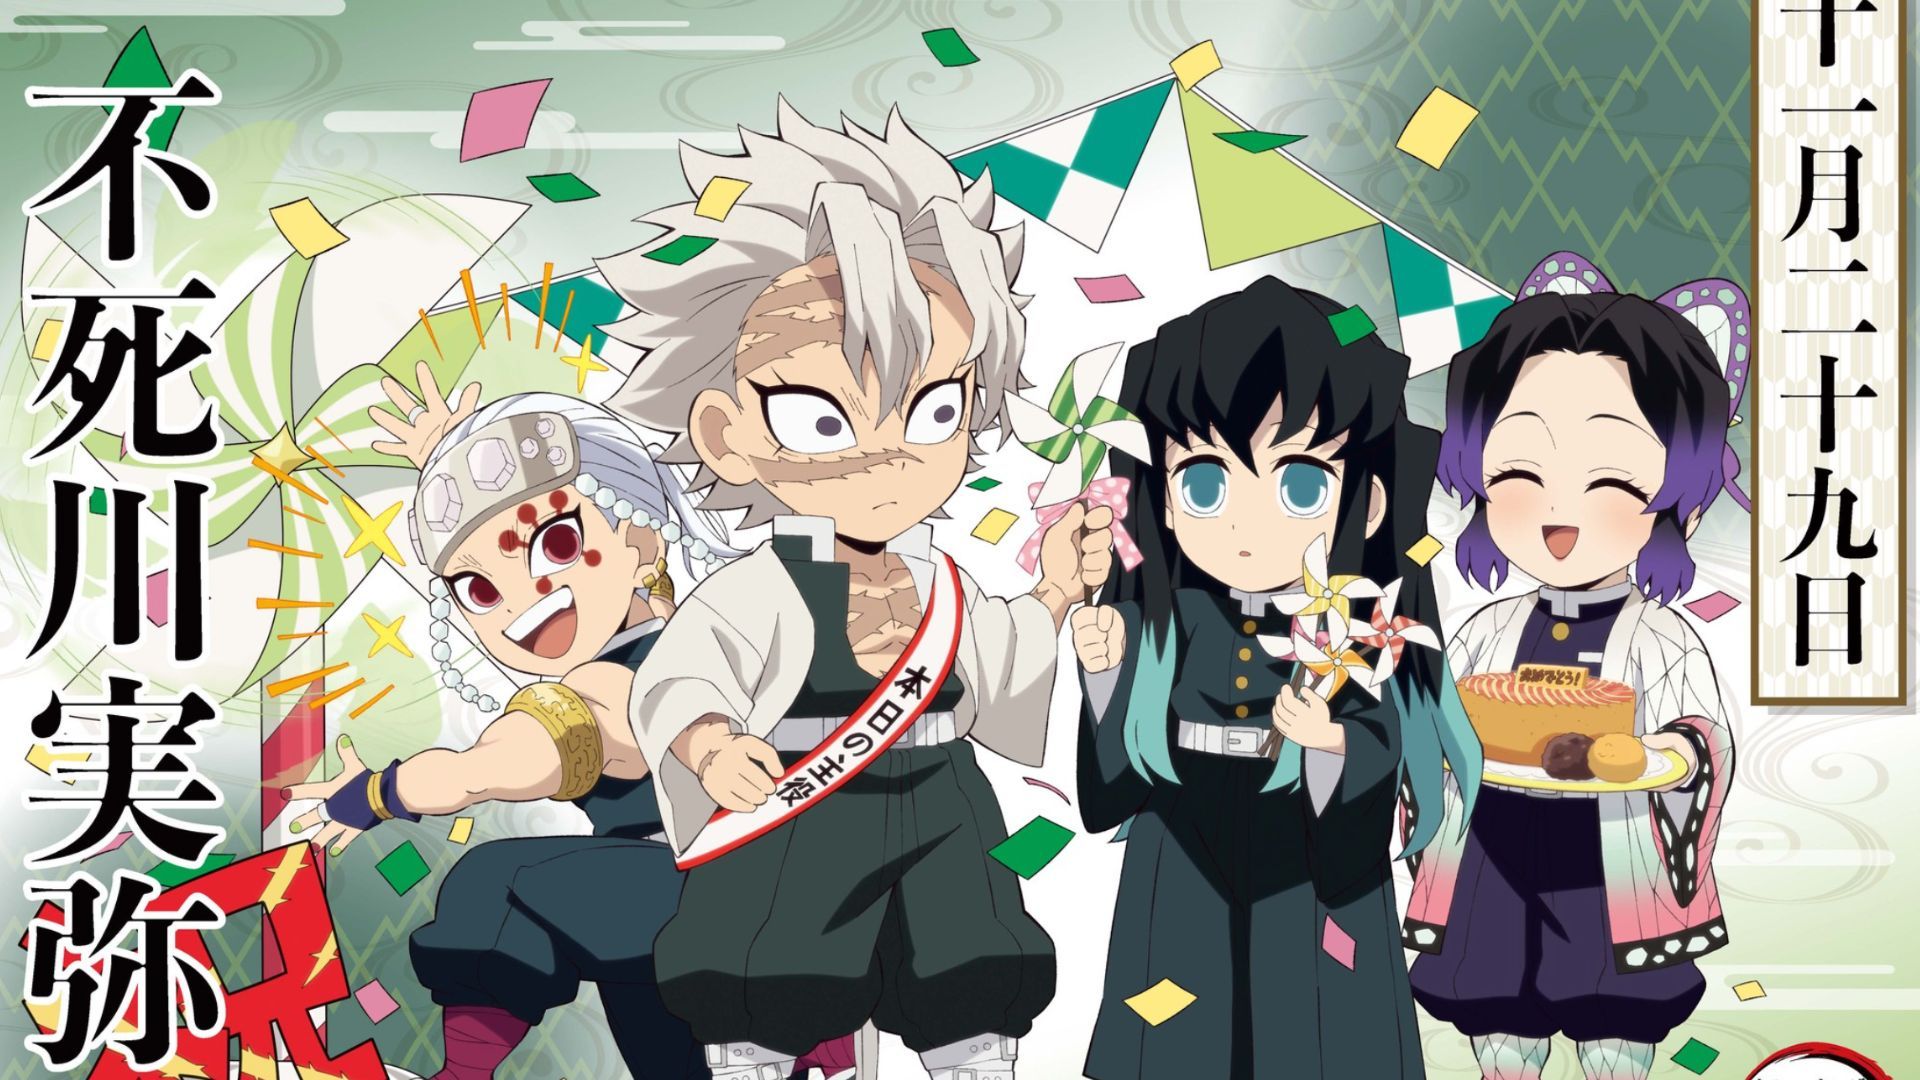 Medalist manga announces an amazing anime adaptation